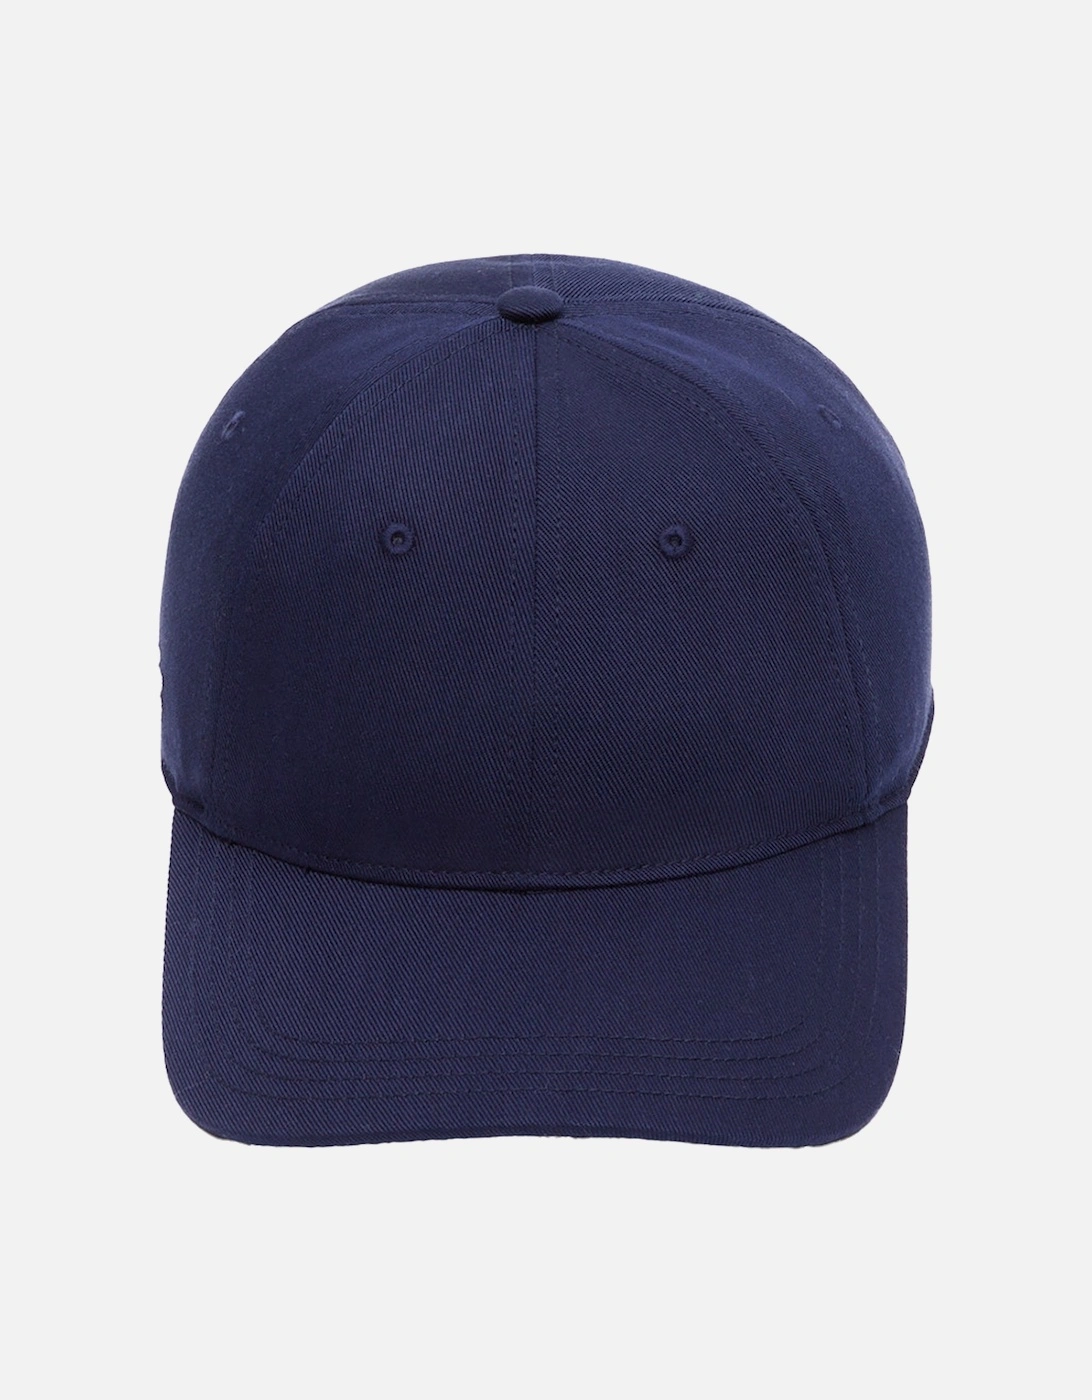 Mens Adjustable Baseball Cap (Marine Blue)